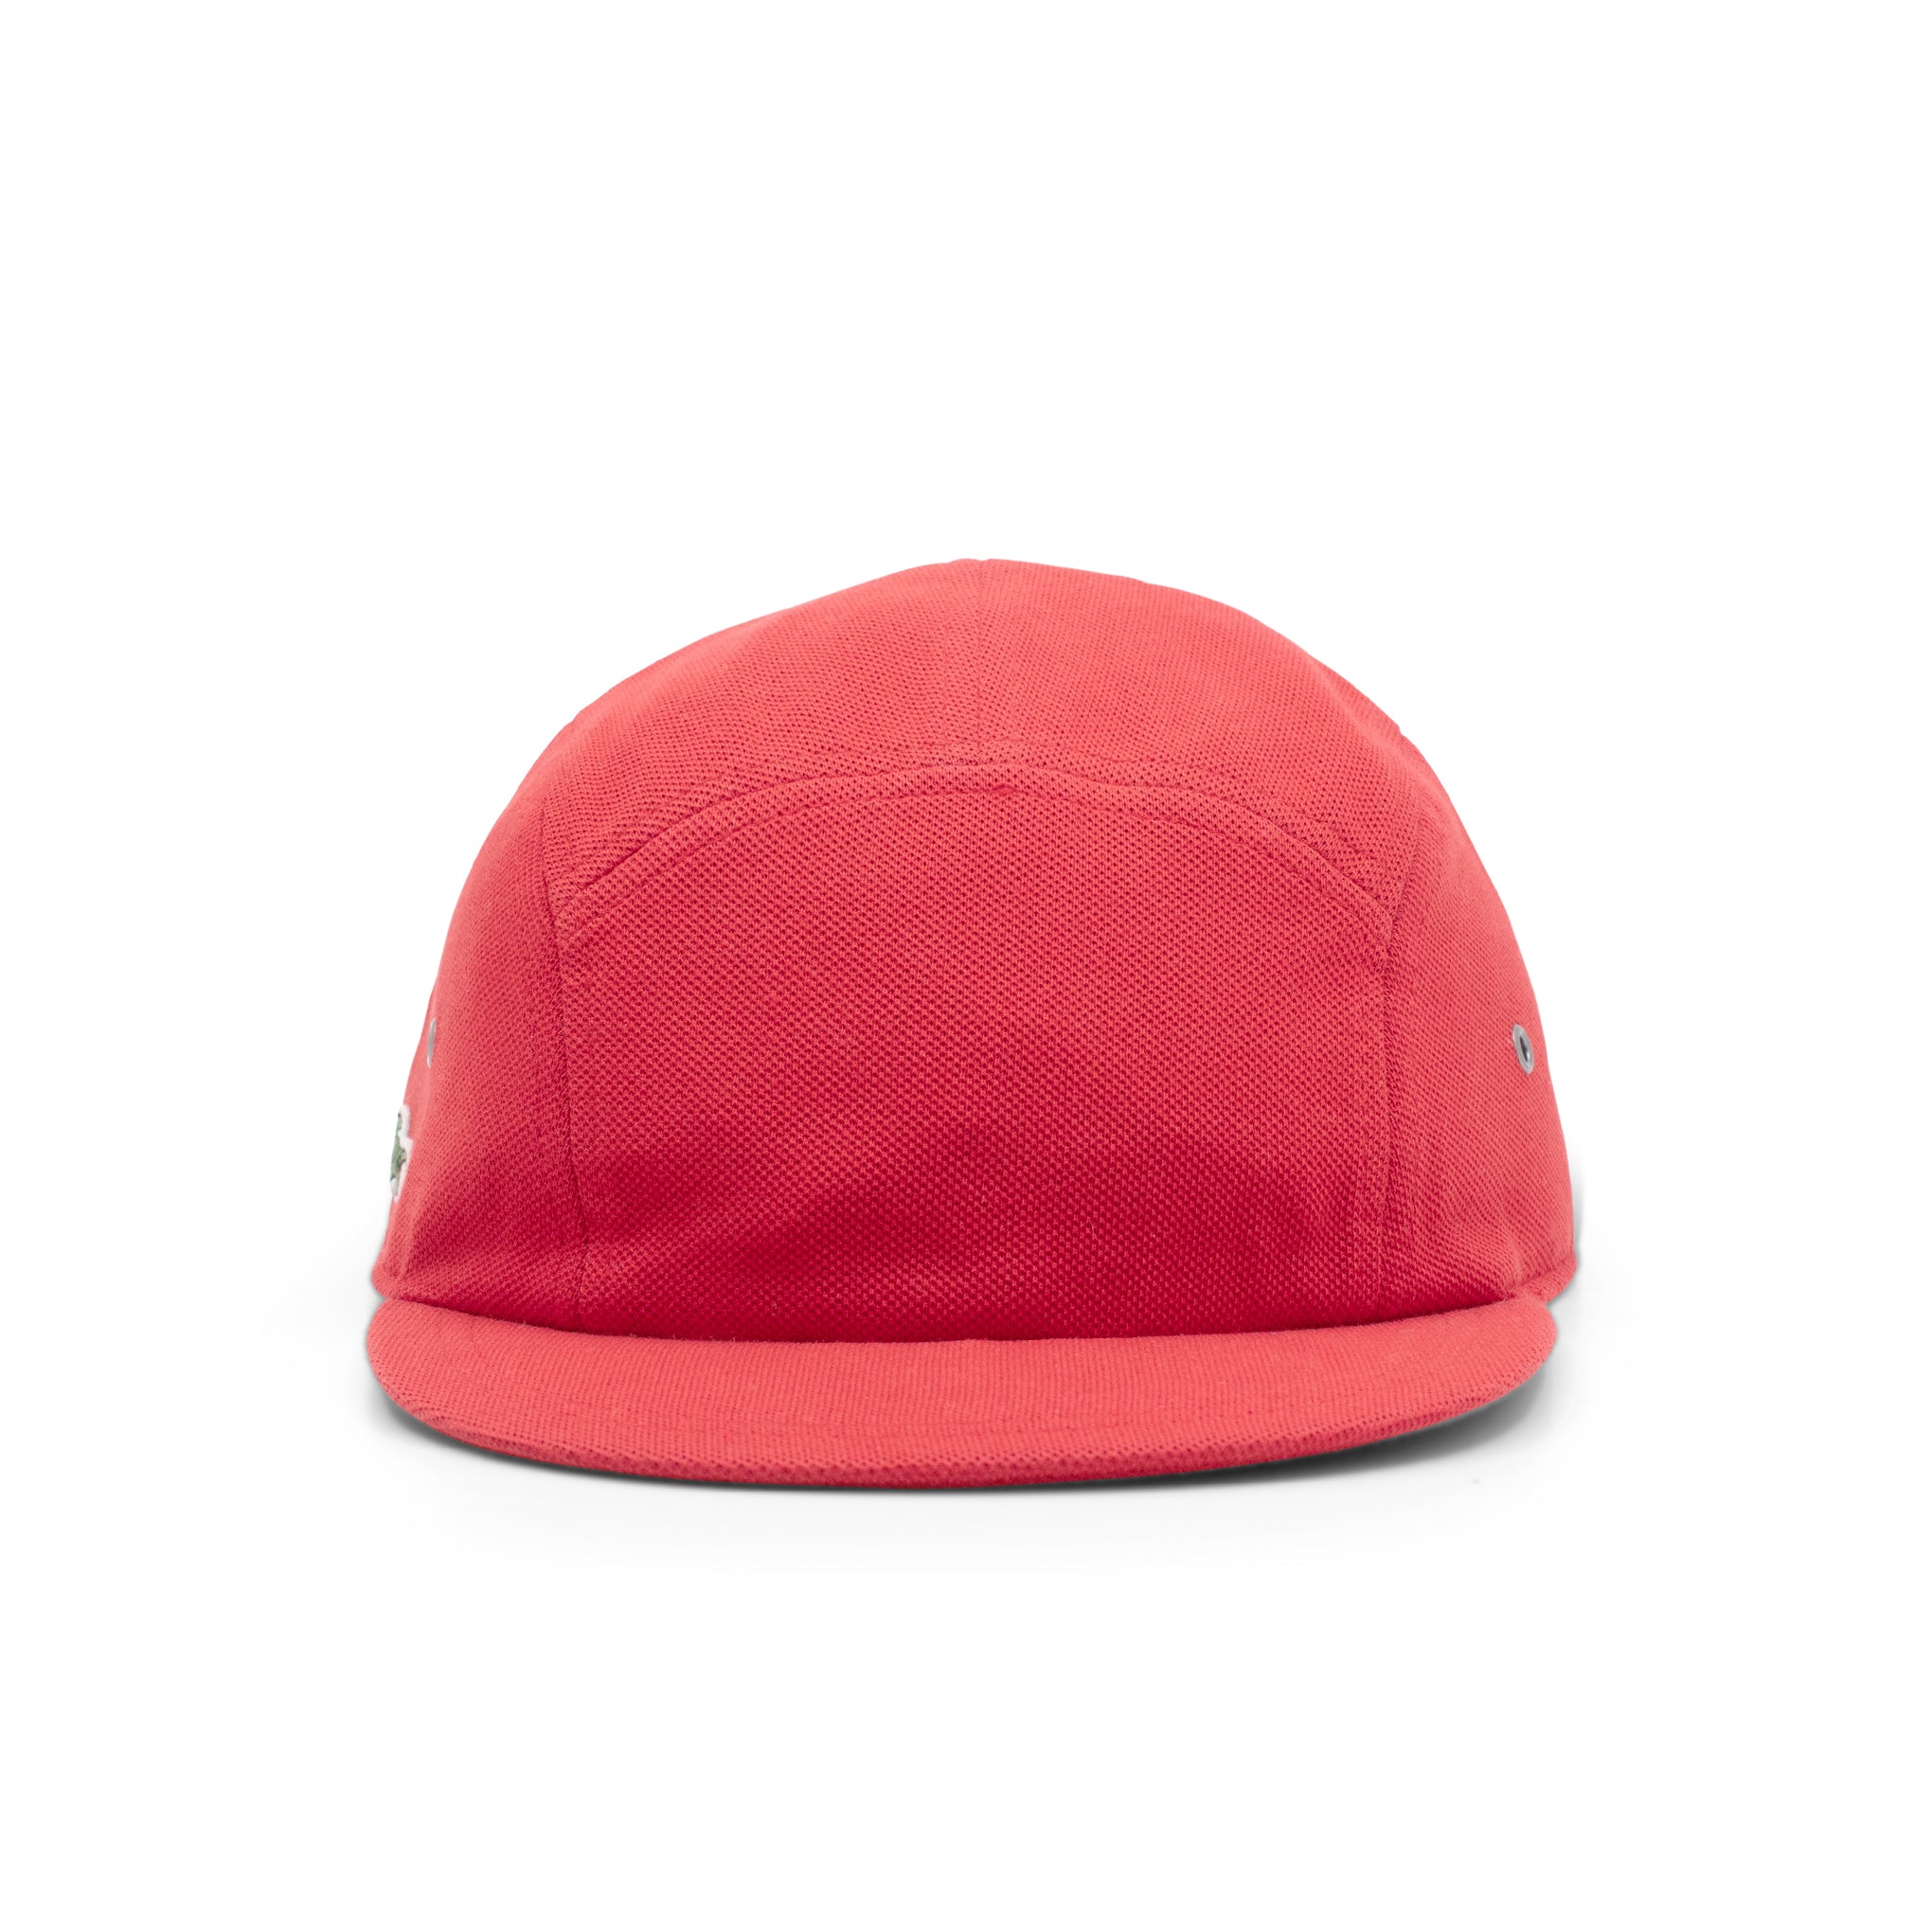 SUPREME LACOSTE PIQUE KNIT CAMP CAP RED